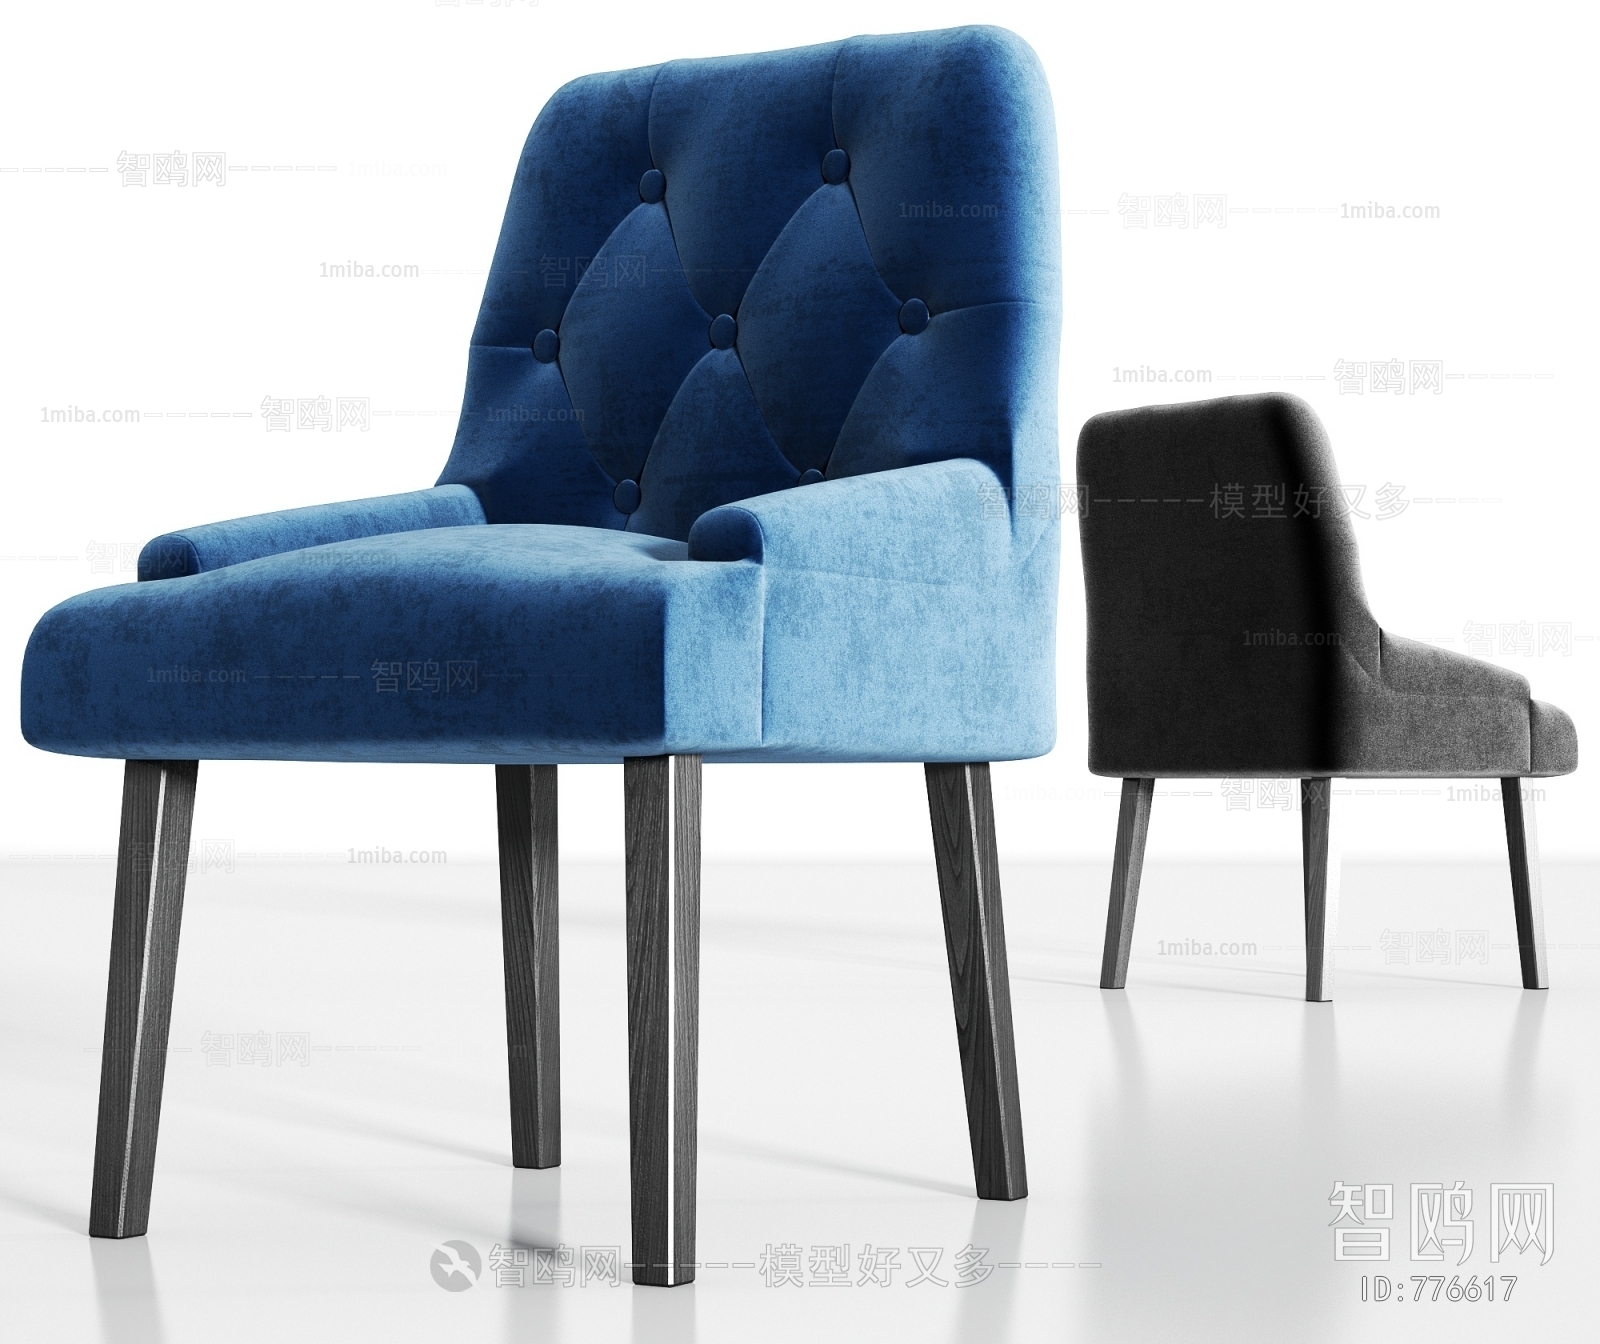 Simple European Style Single Chair